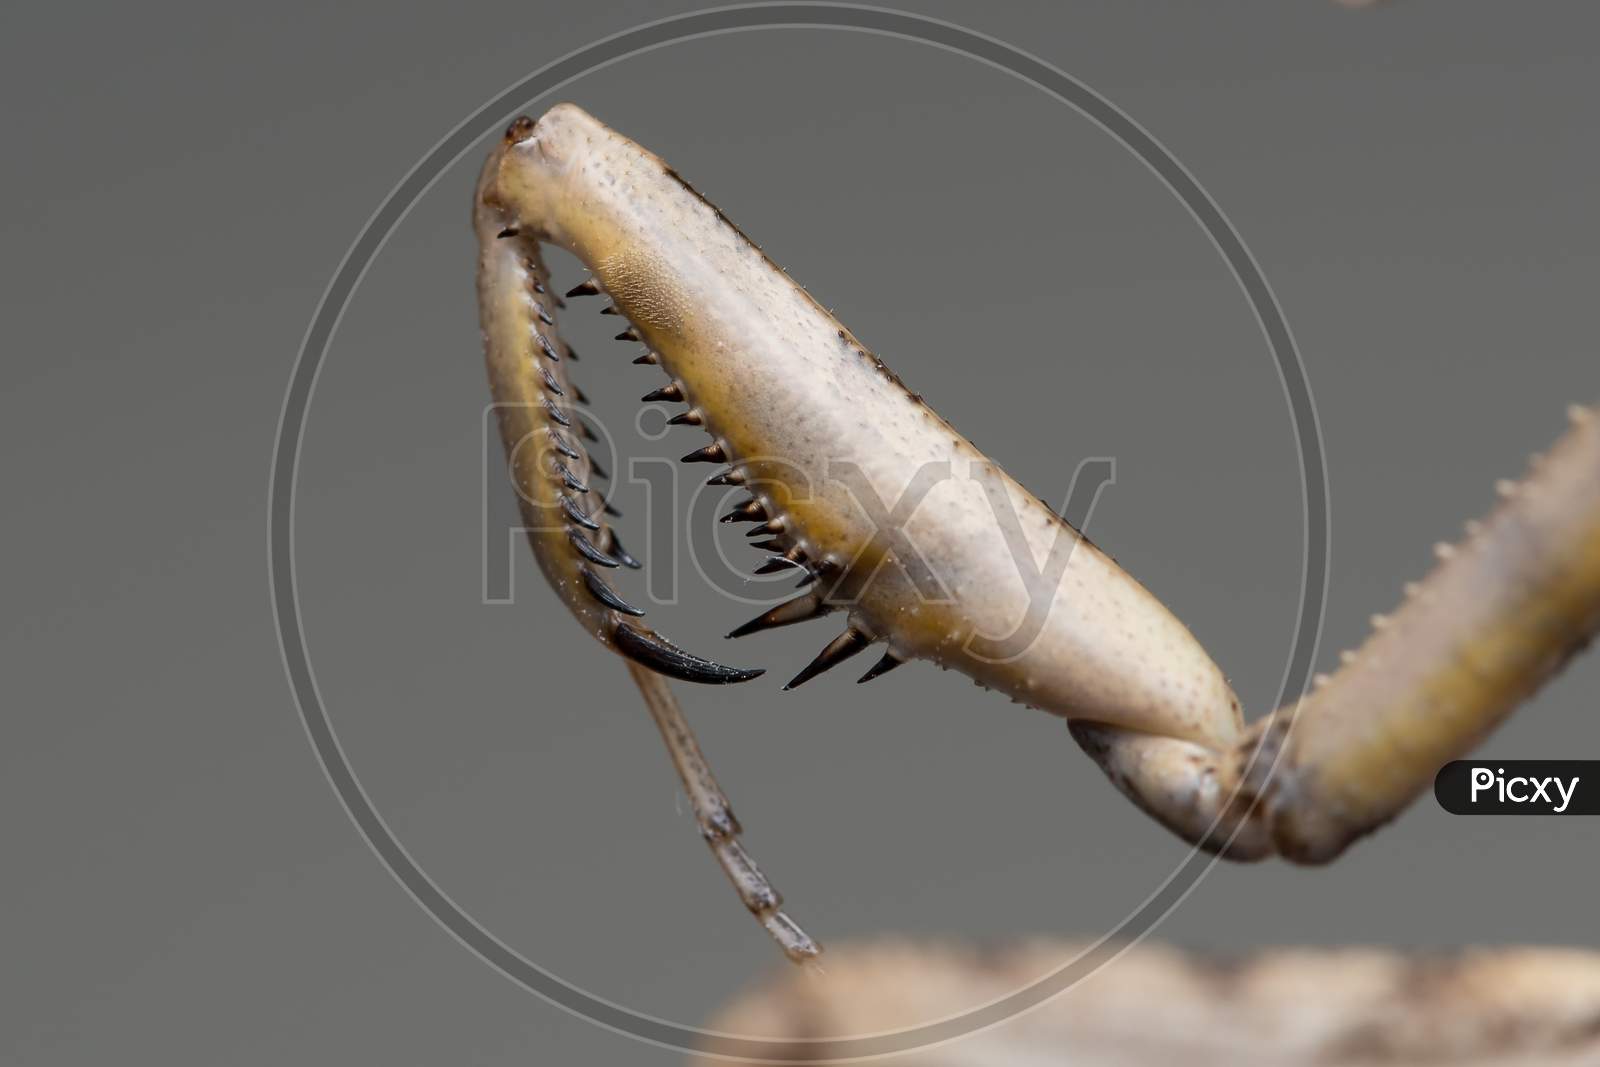 Raptorial Claws Of A Mantis (Iris Oratoria)